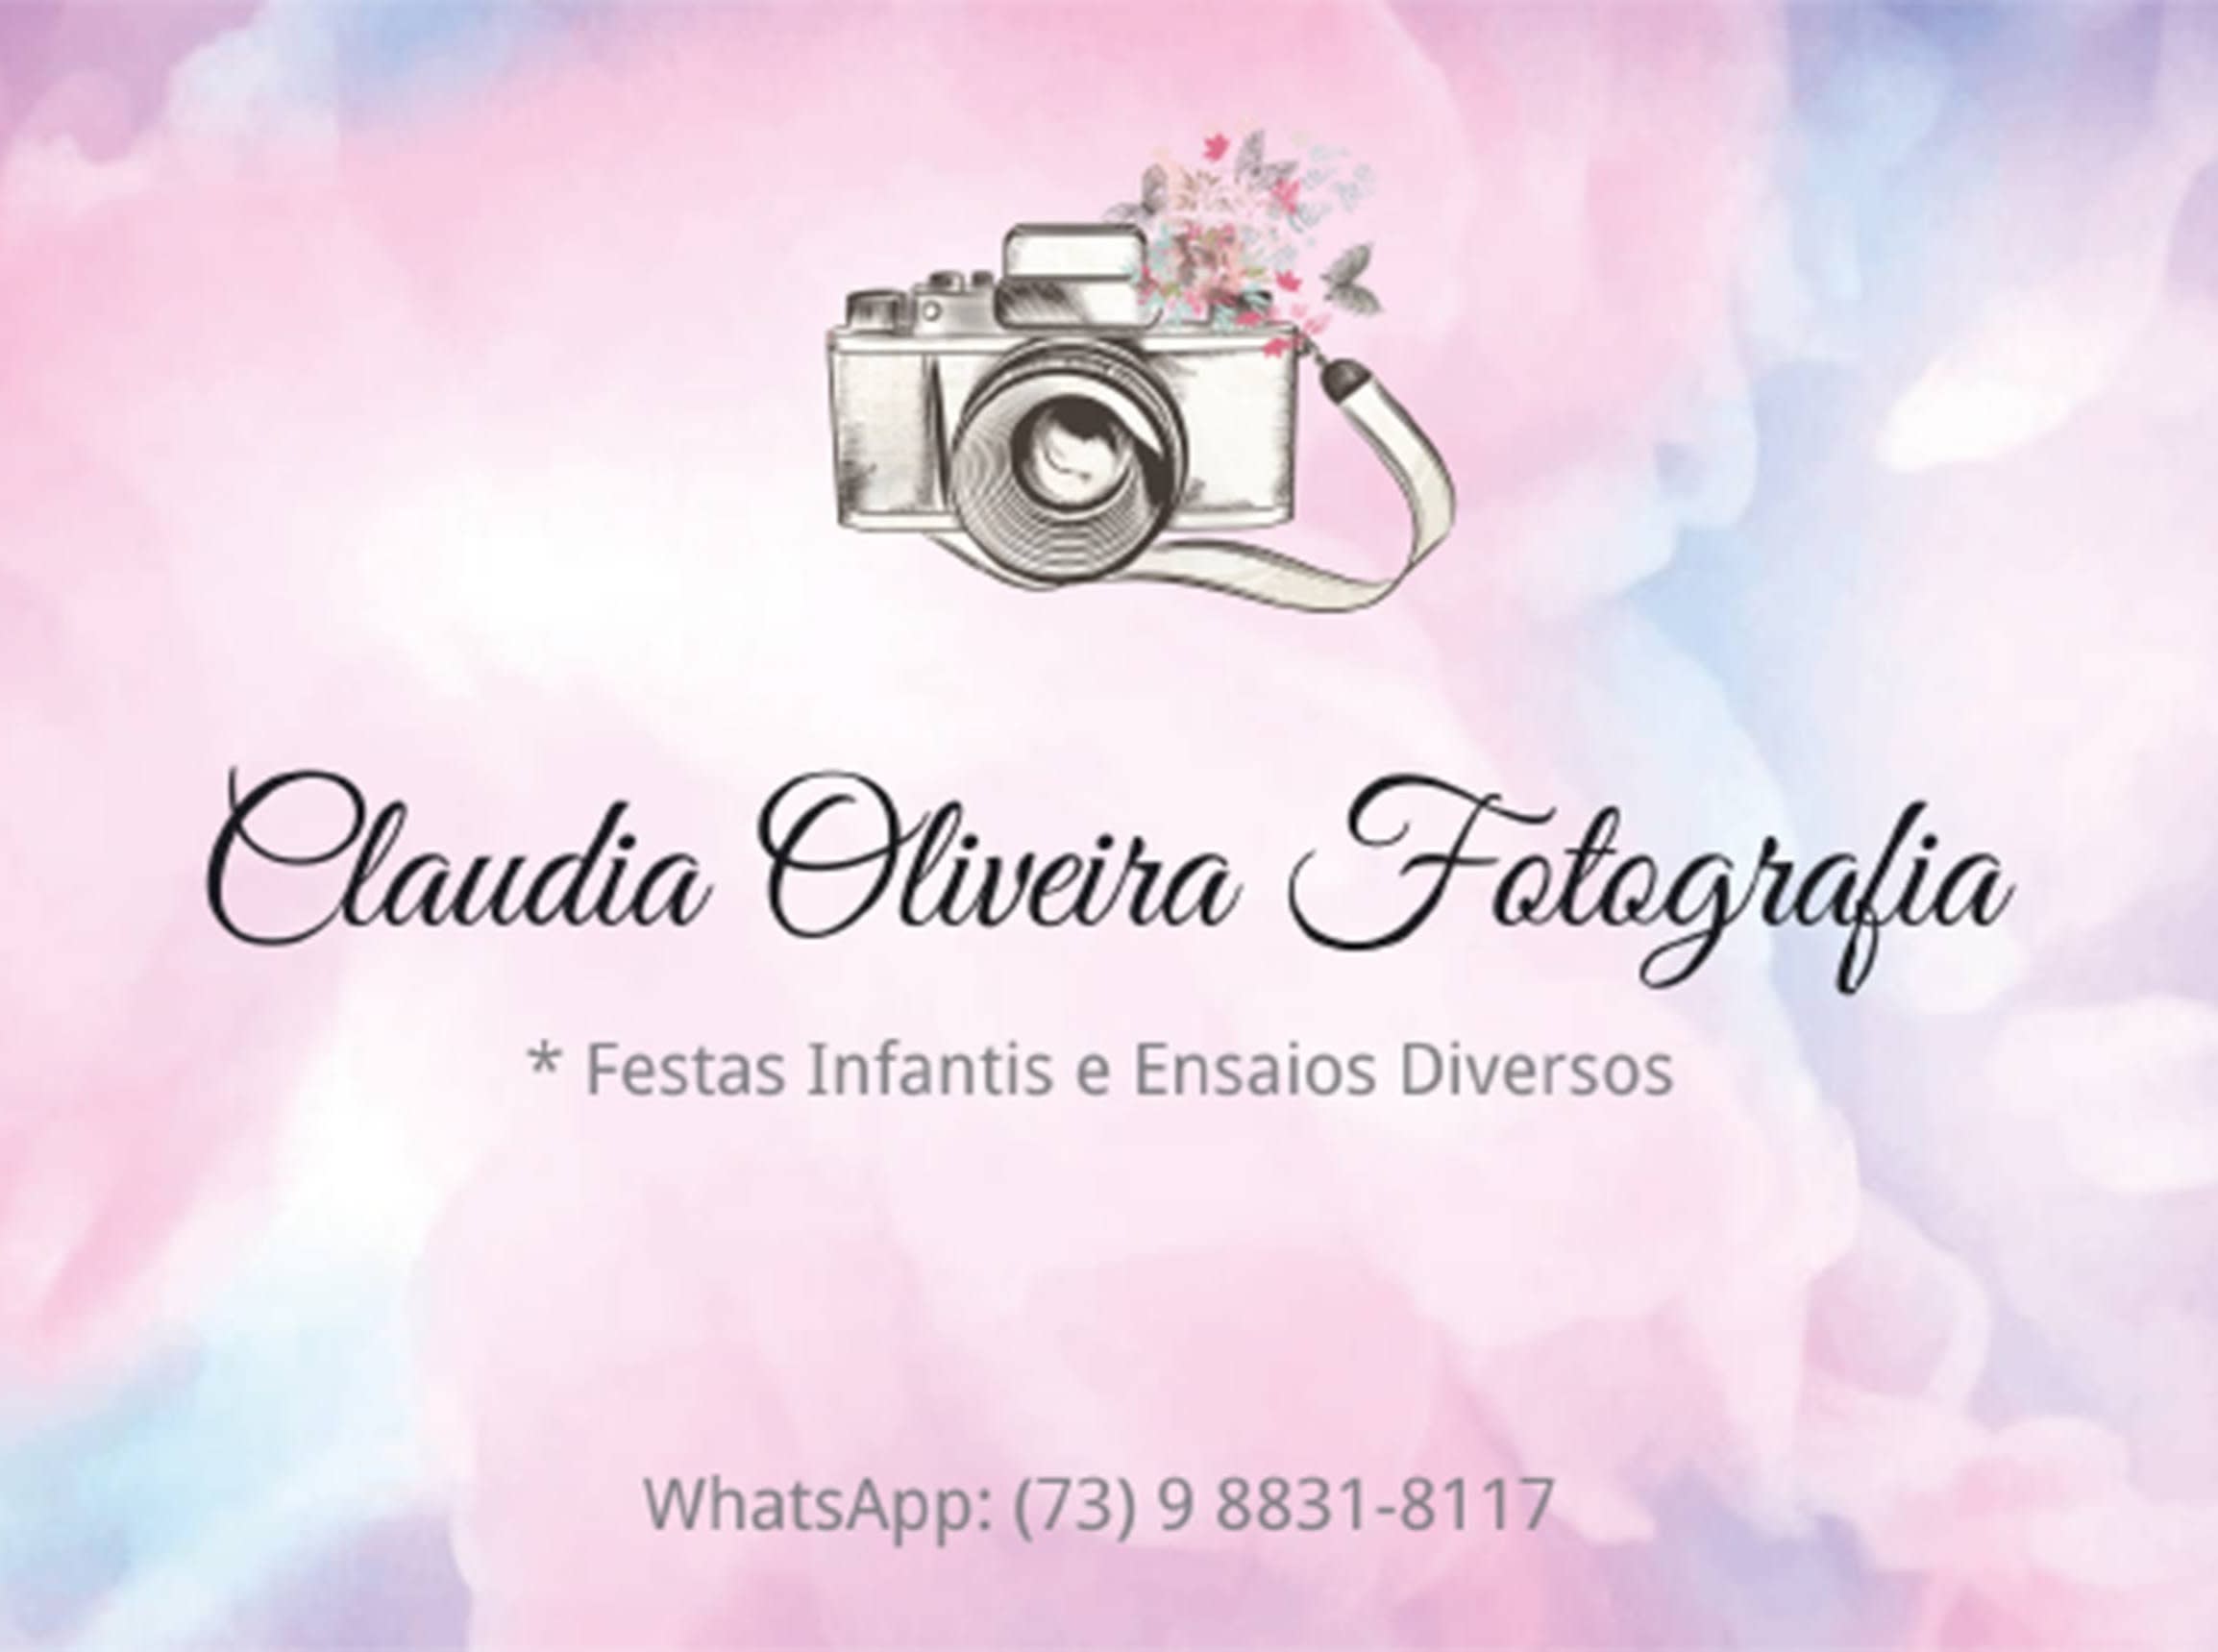 Claudia Oliveira Fotografia